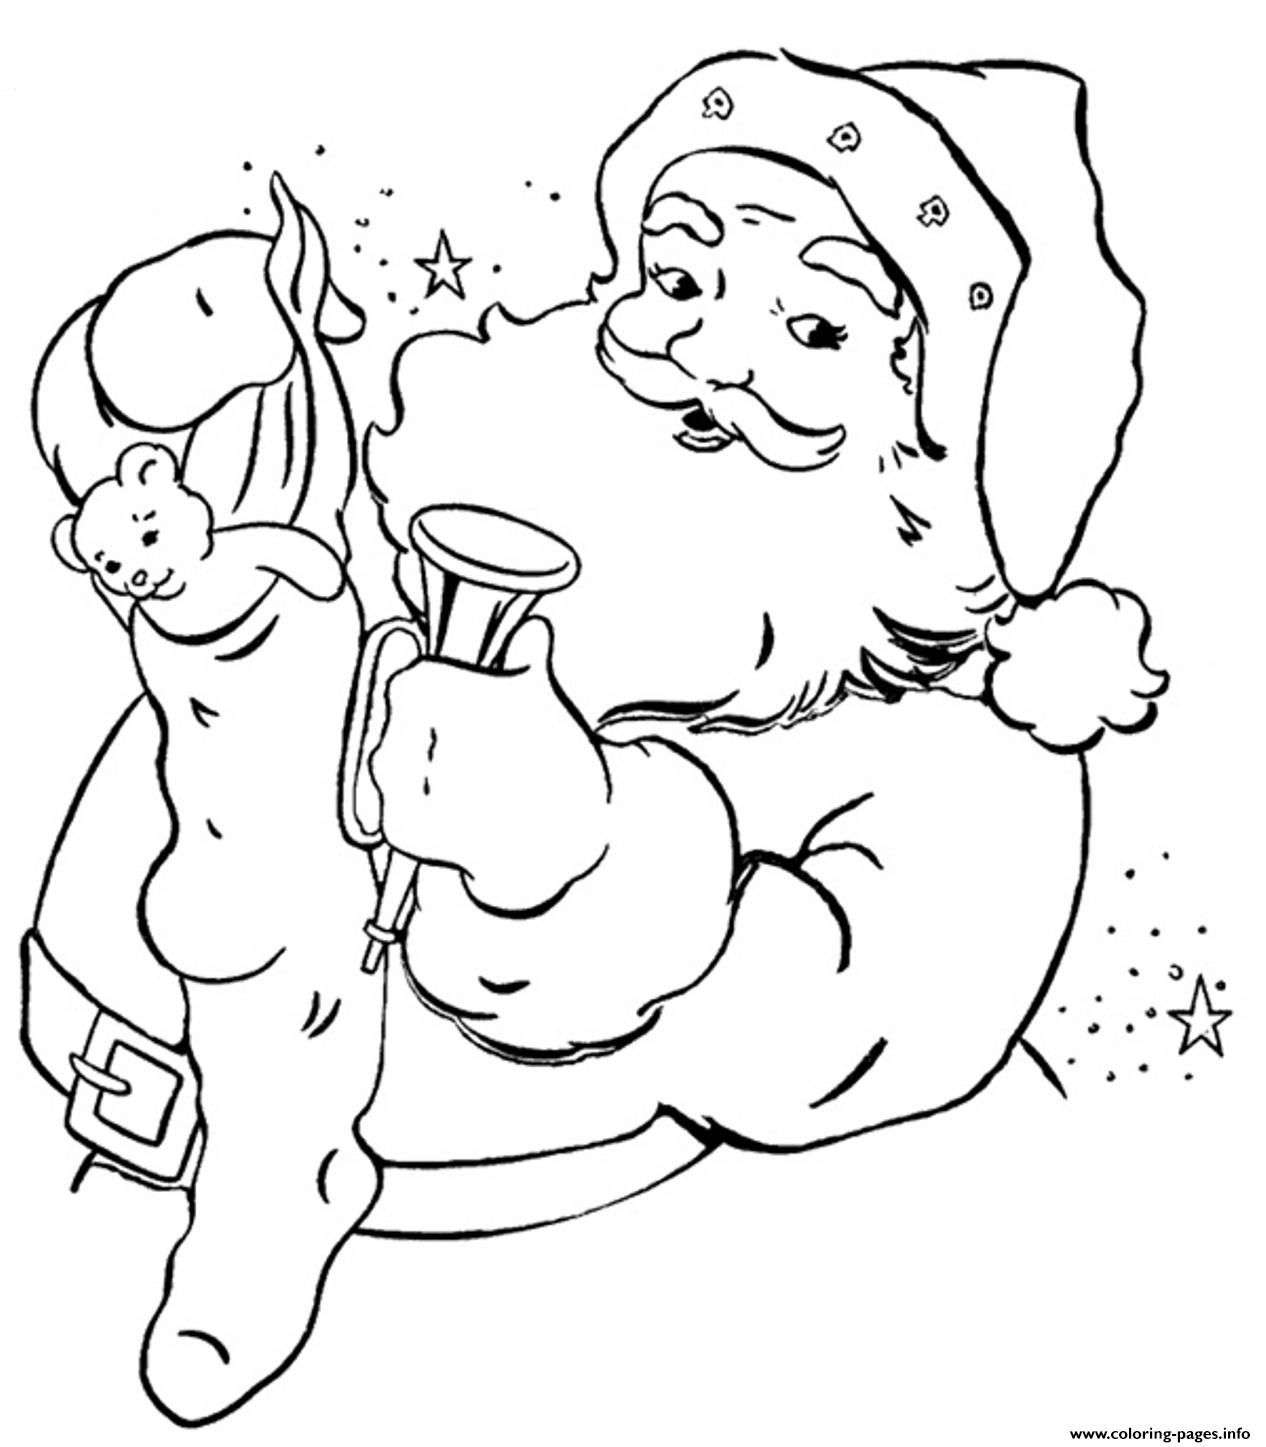 Stocking Present Santa Claus S0359 coloring